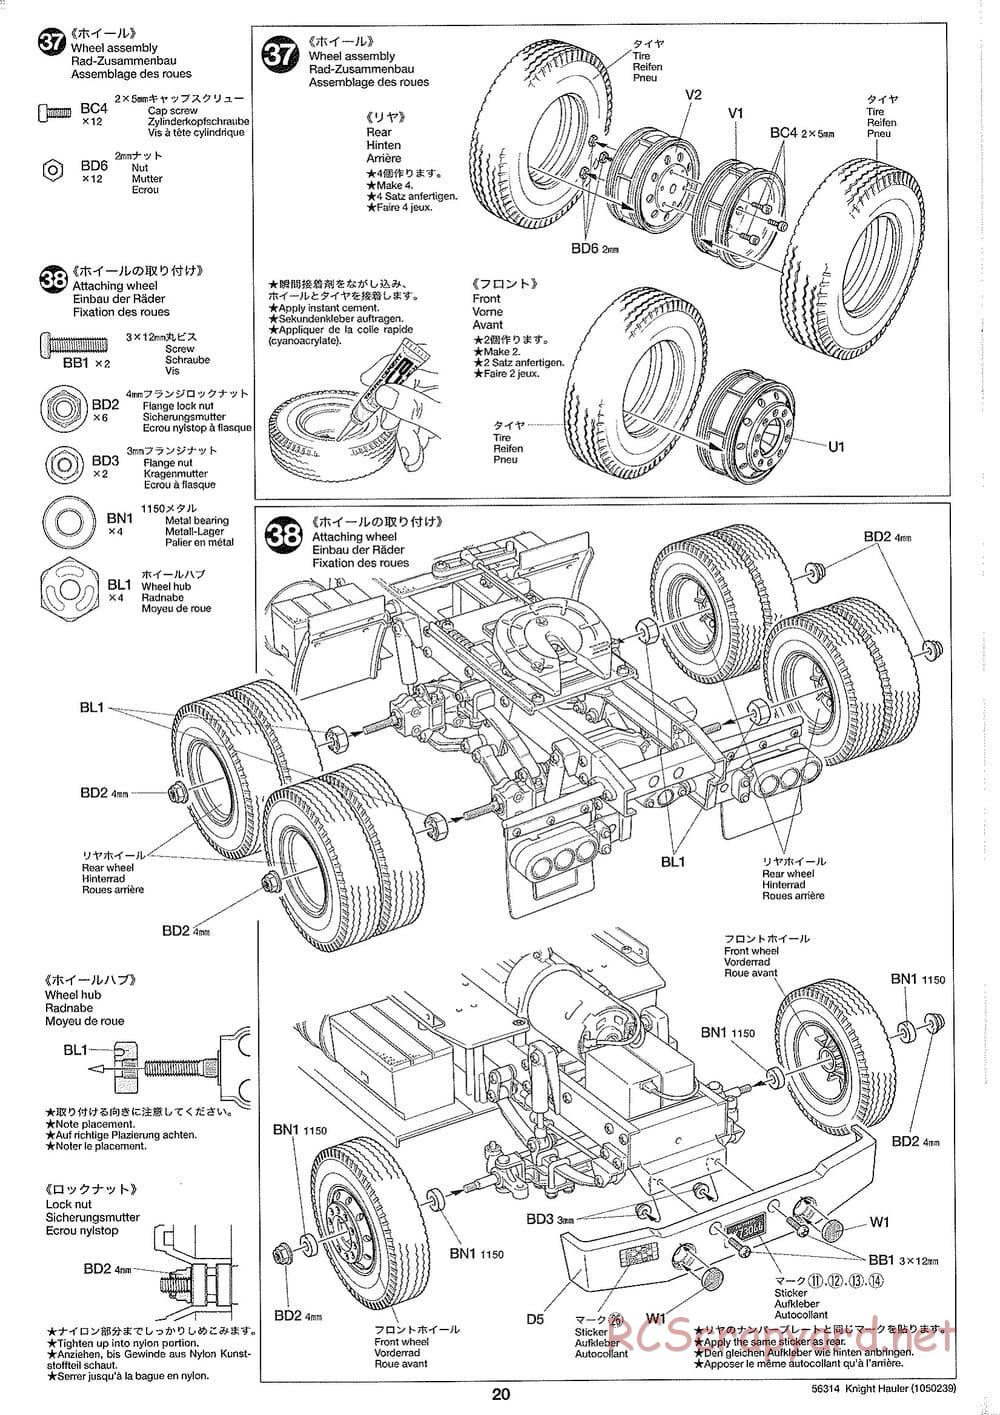 Tamiya - Knight Hauler Tractor Truck Chassis - Manual - Page 20